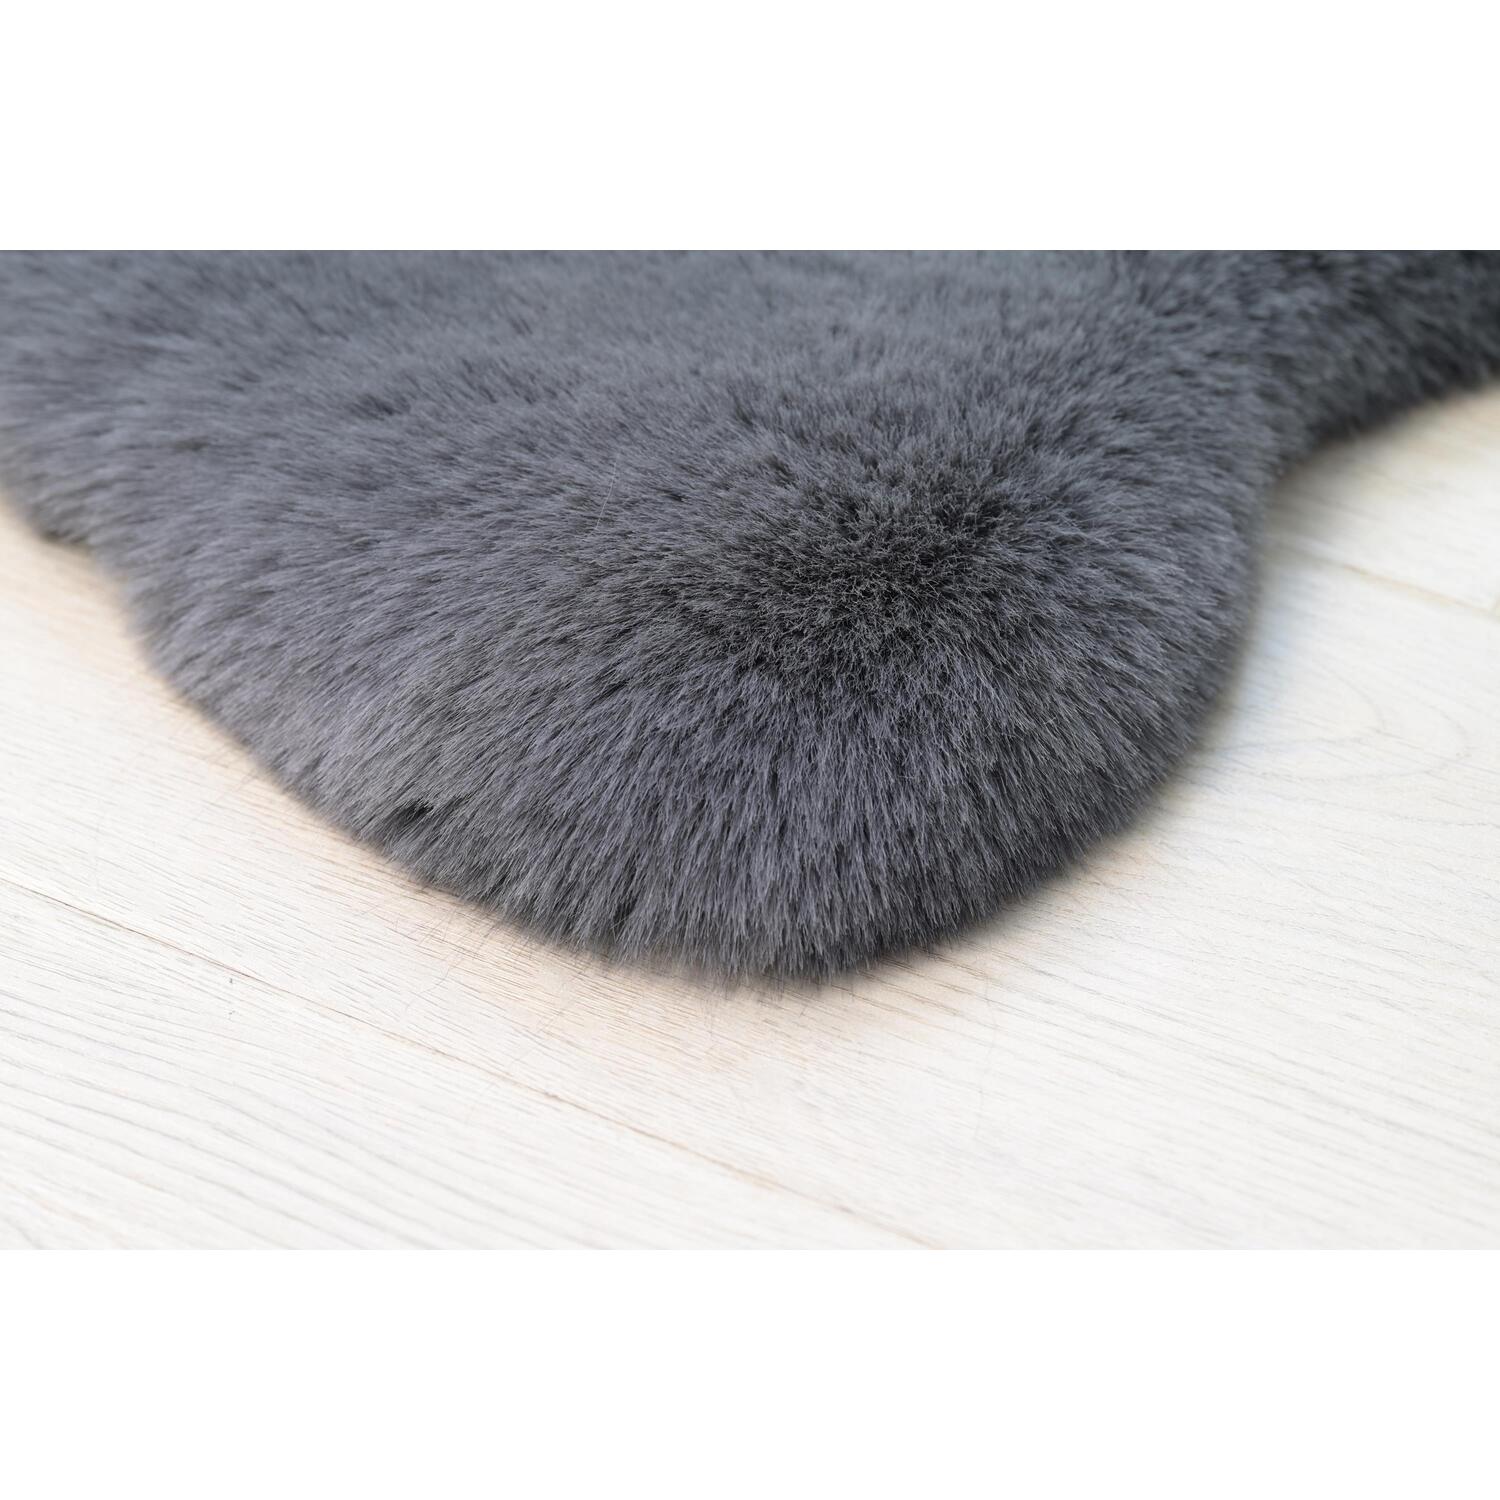 Deluxe Faux Rabbit Fur Rug - Midnight Grey Image 3